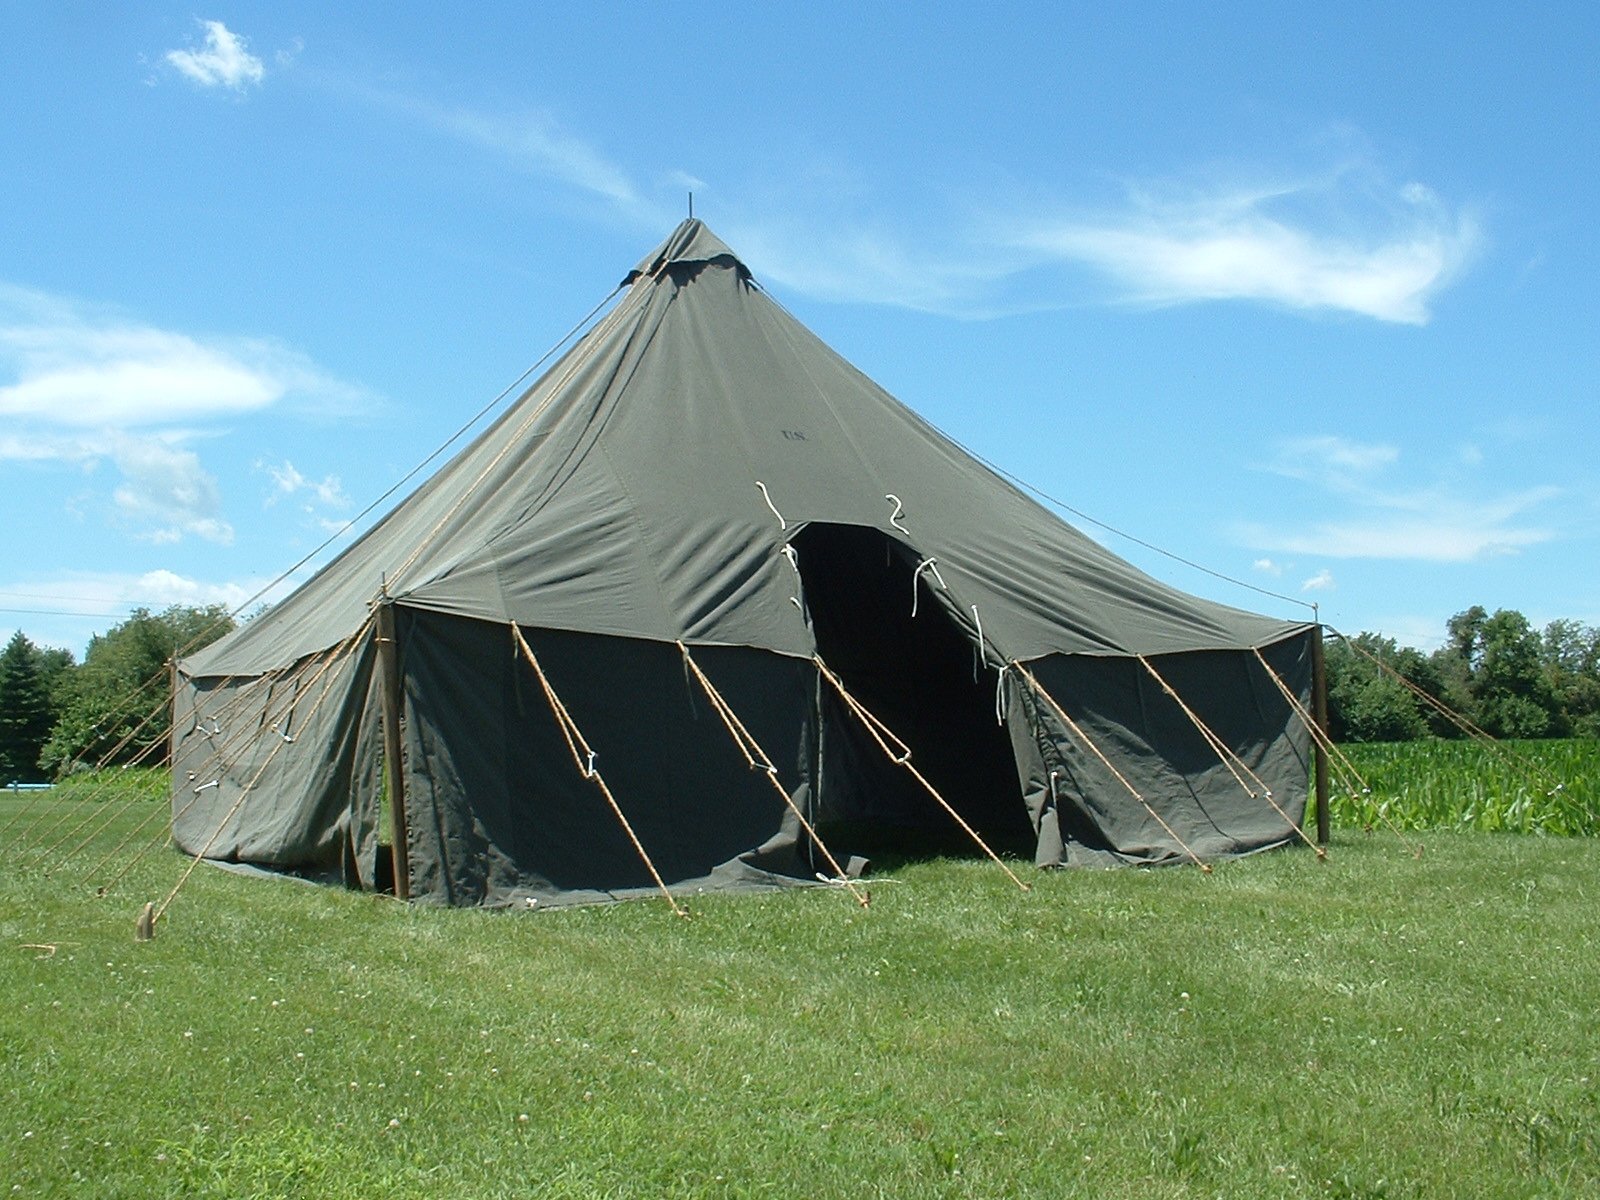 В 3 палатках жили. Армейская палатка Sun Gölge Branda, tente, çadir. Армейская палатка 4.5x4.5. Шатер Helios Solano. Полевая палатка армейская 3 x 3.